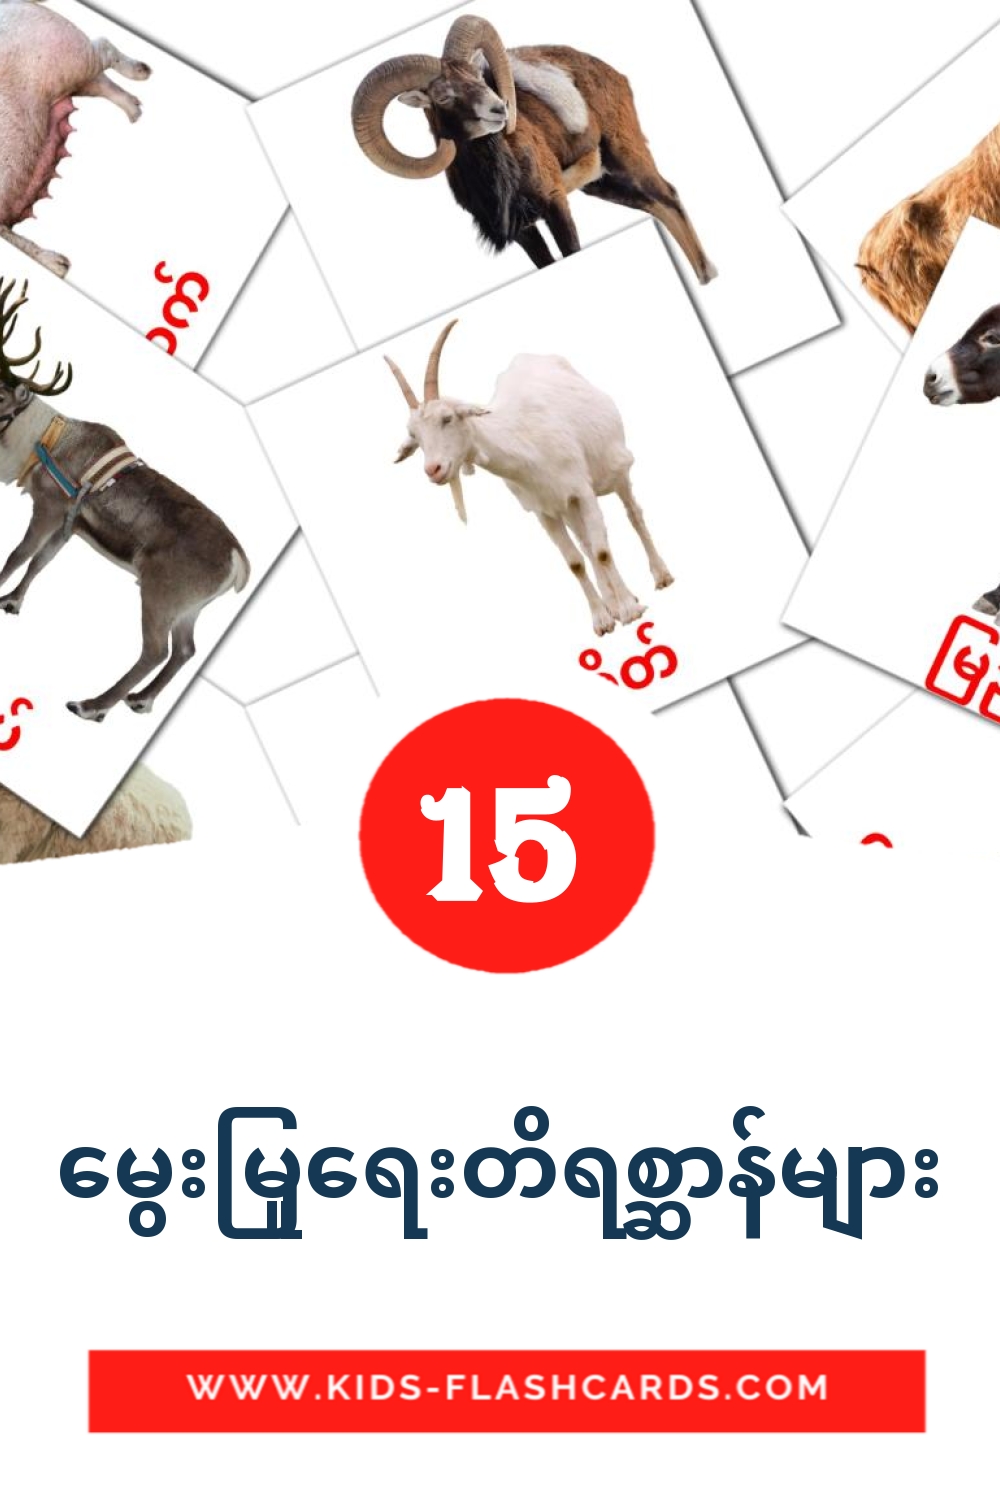 15 carte illustrate di မွေးမြူရေးတိရစ္ဆာန်များ per la scuola materna in birmano